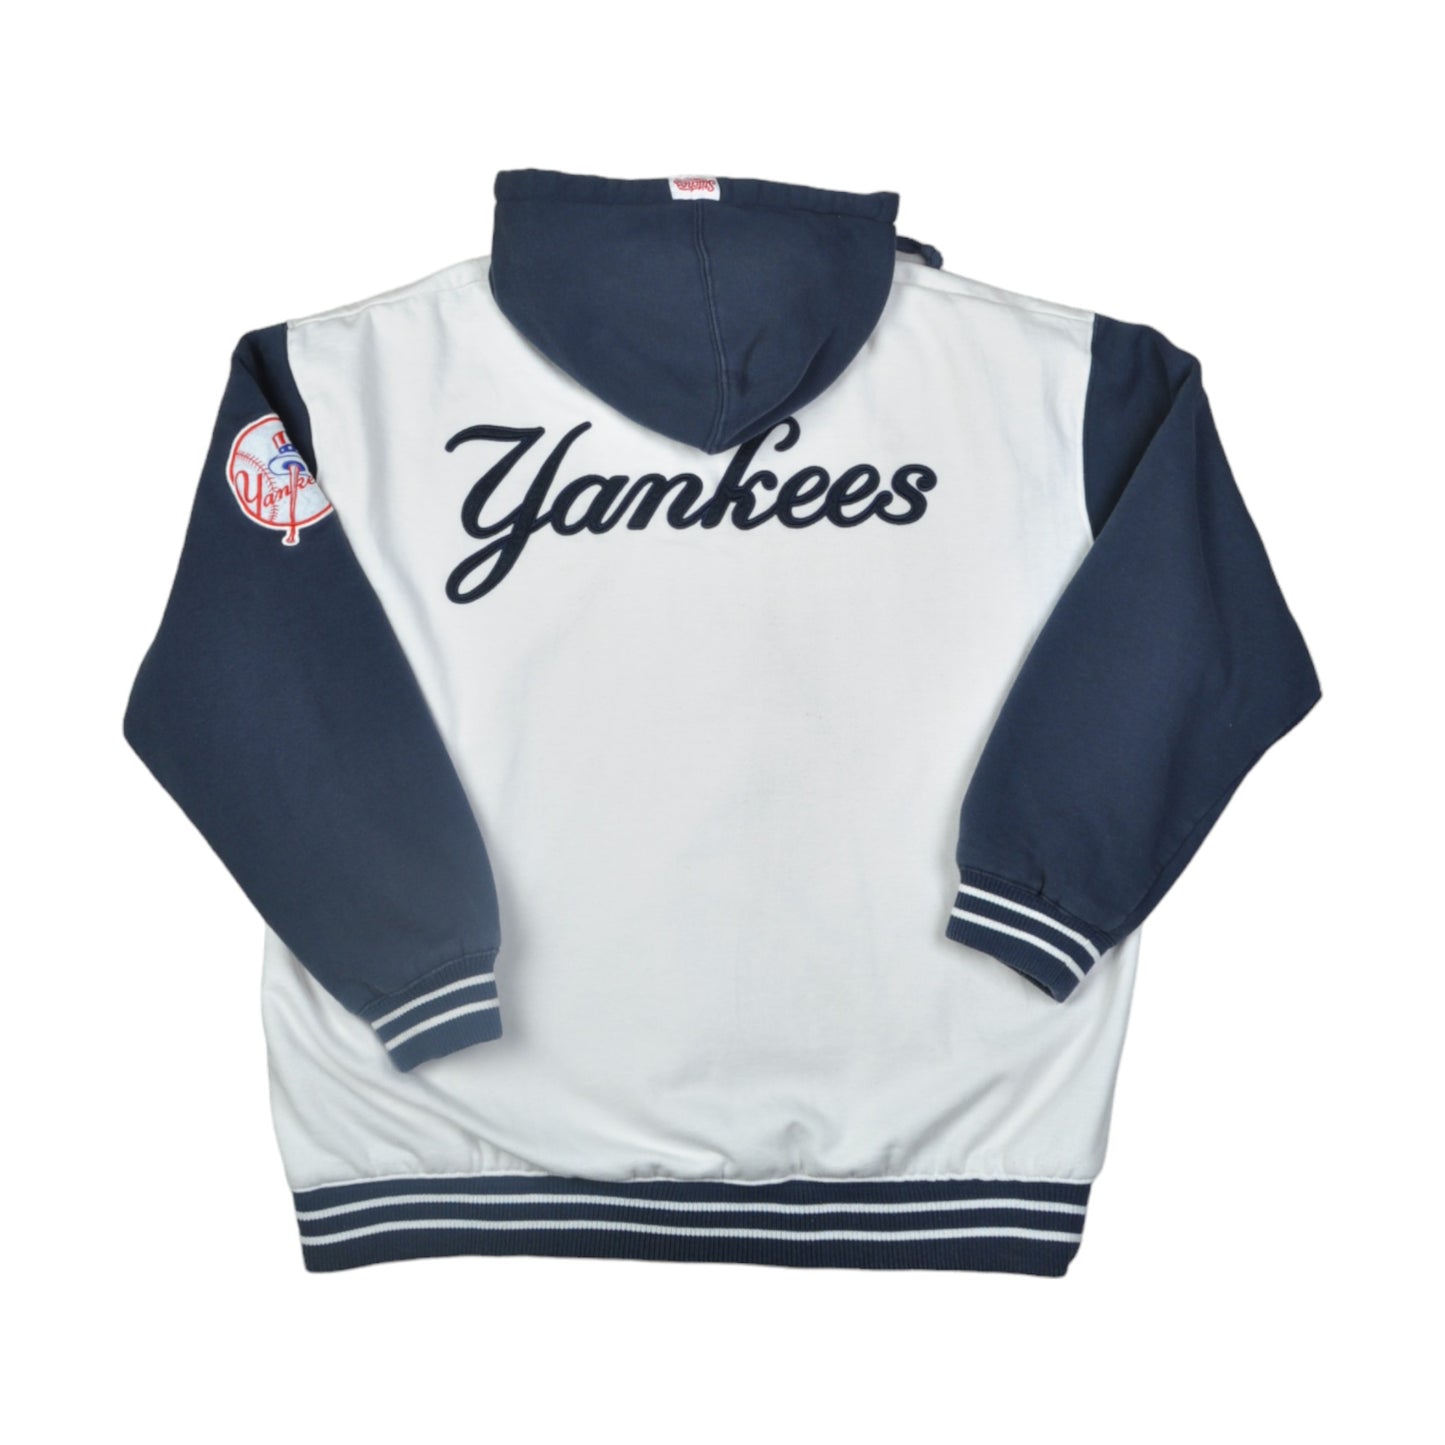 Vintage New York Yankees Baseball Team Hoodie White/Blue XL